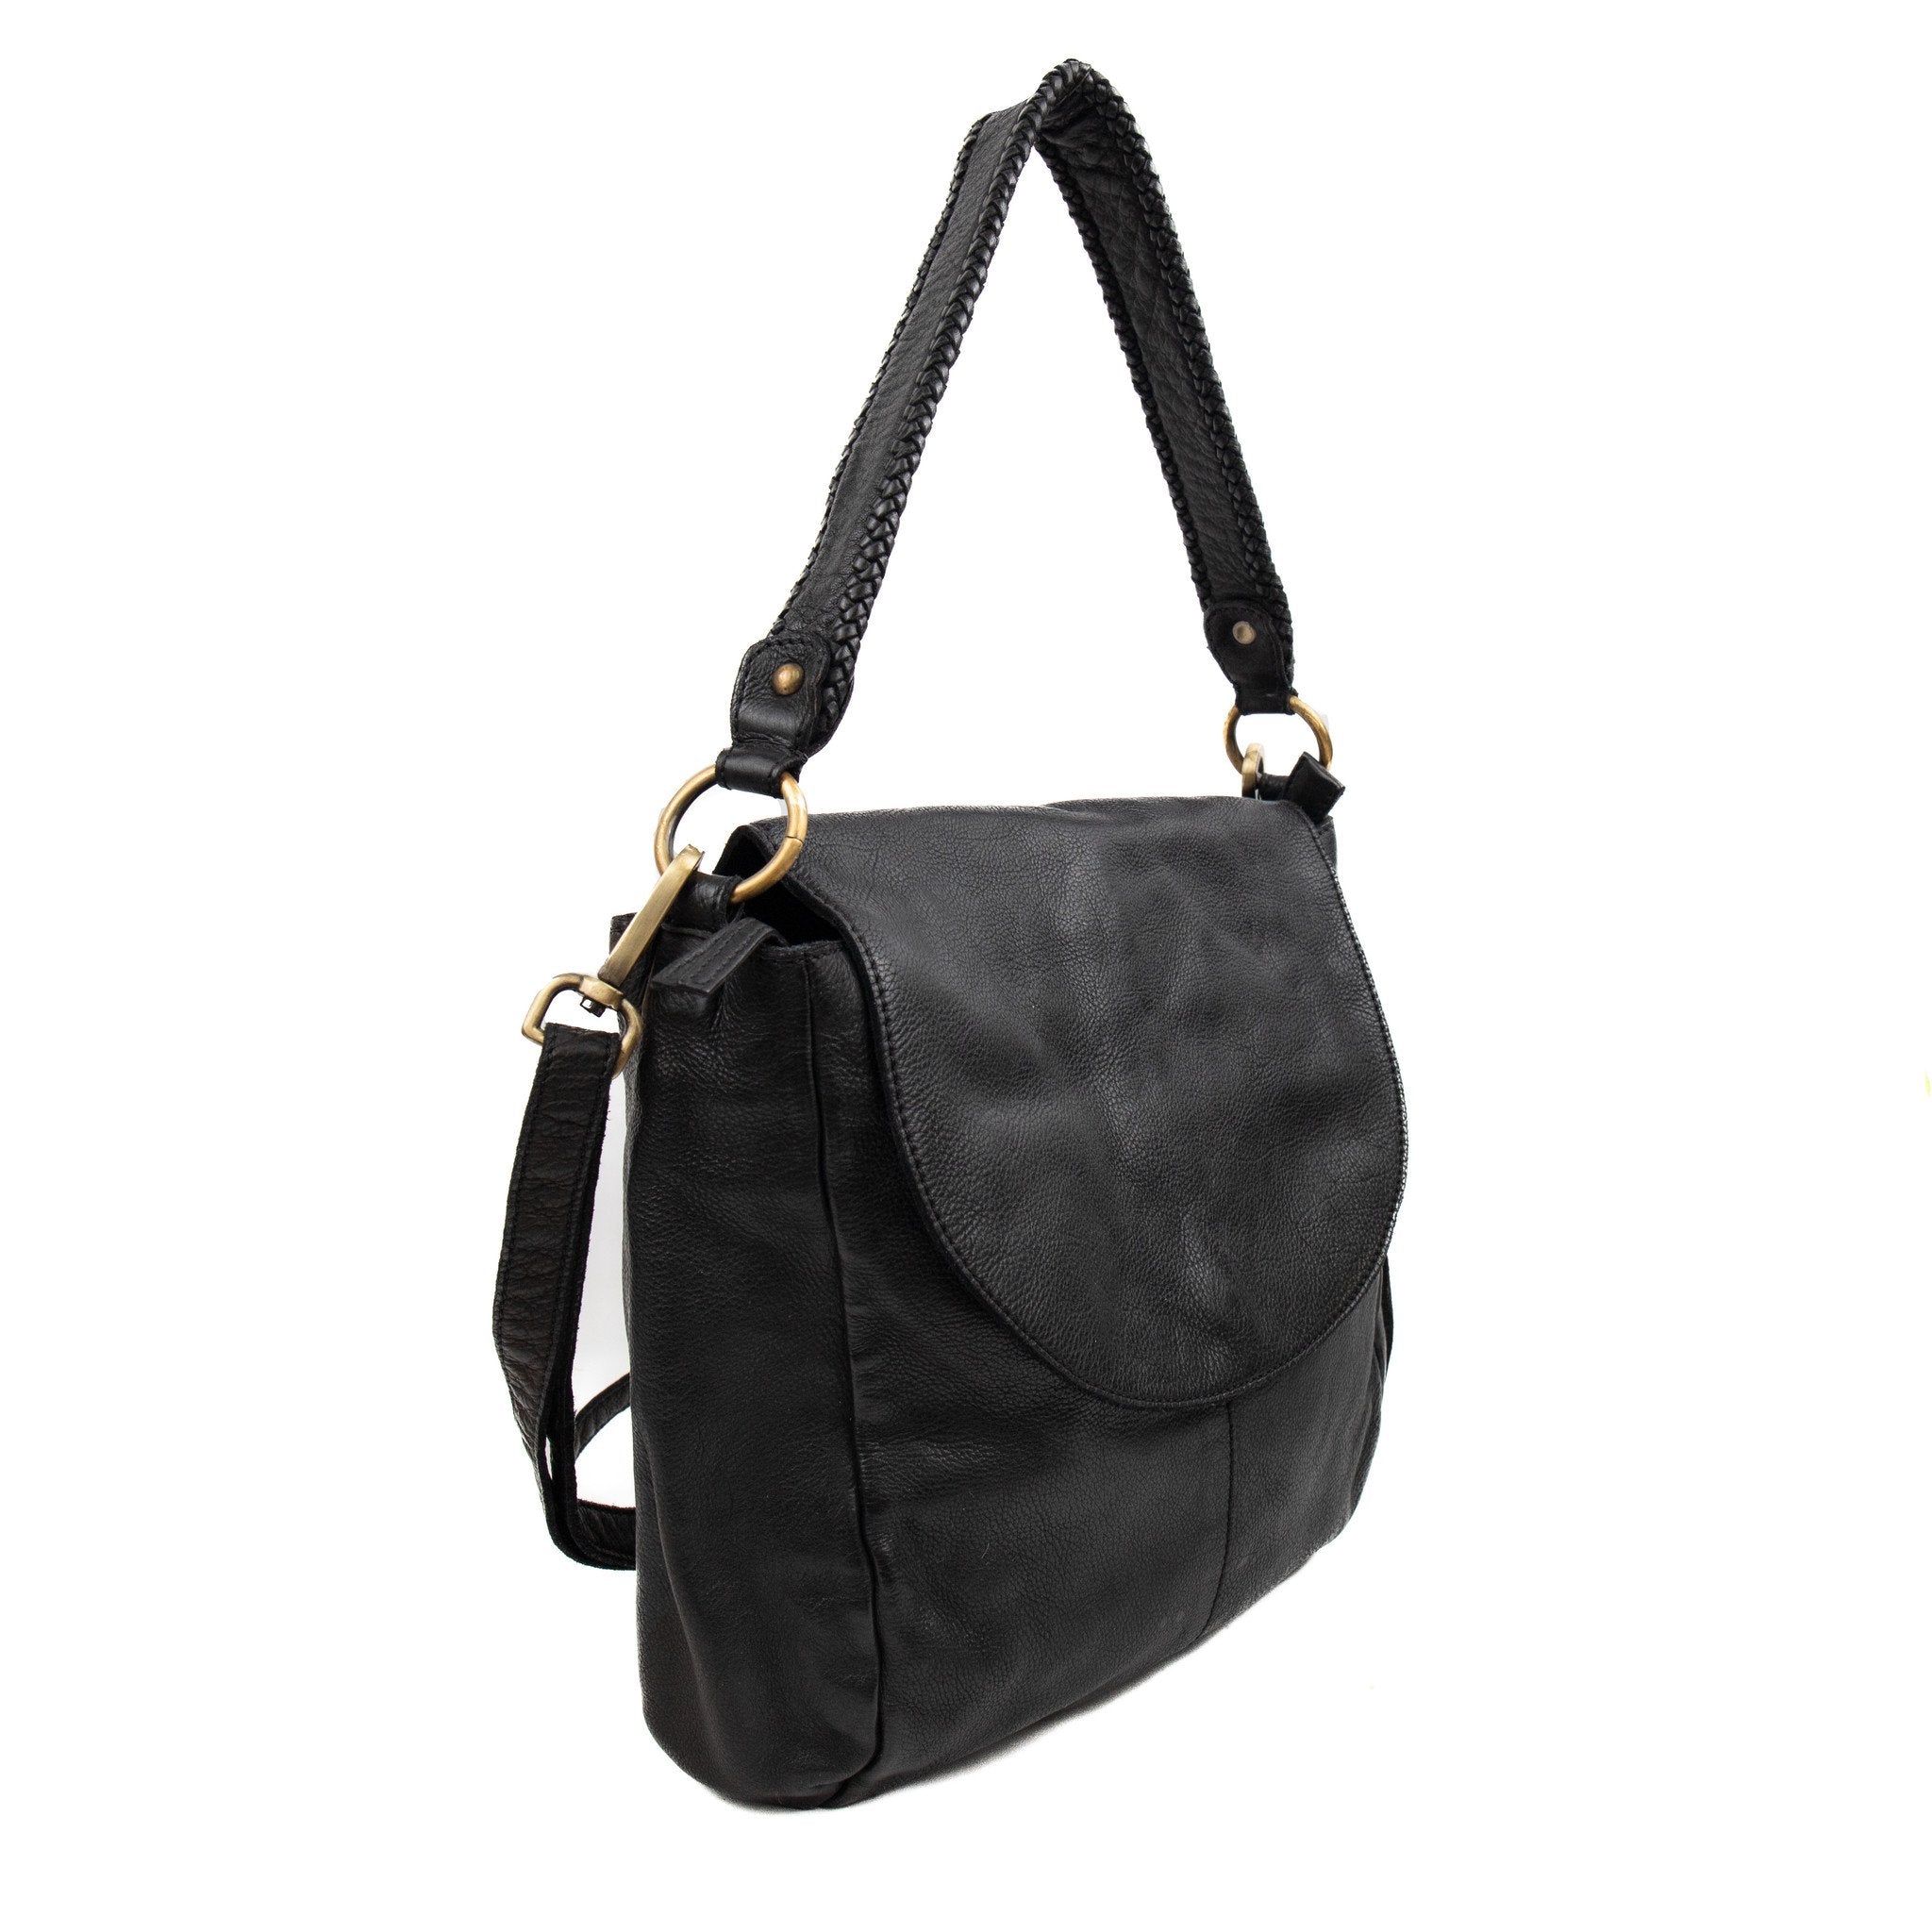 Hand/shoulder bag 'Senorita' black - MJ 1506